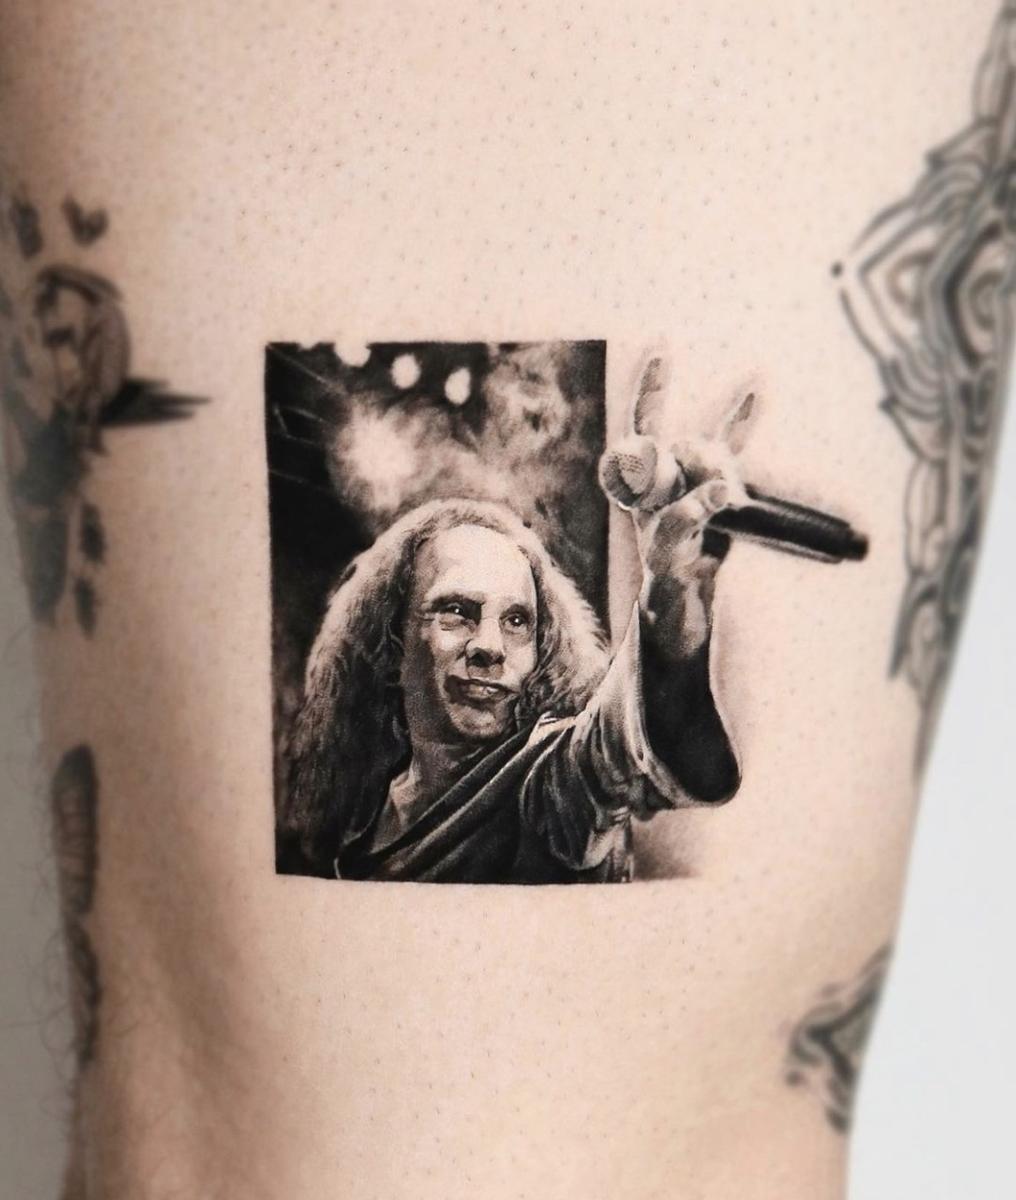 Ronnie James Dio Tribute Tattoo by Via Saru